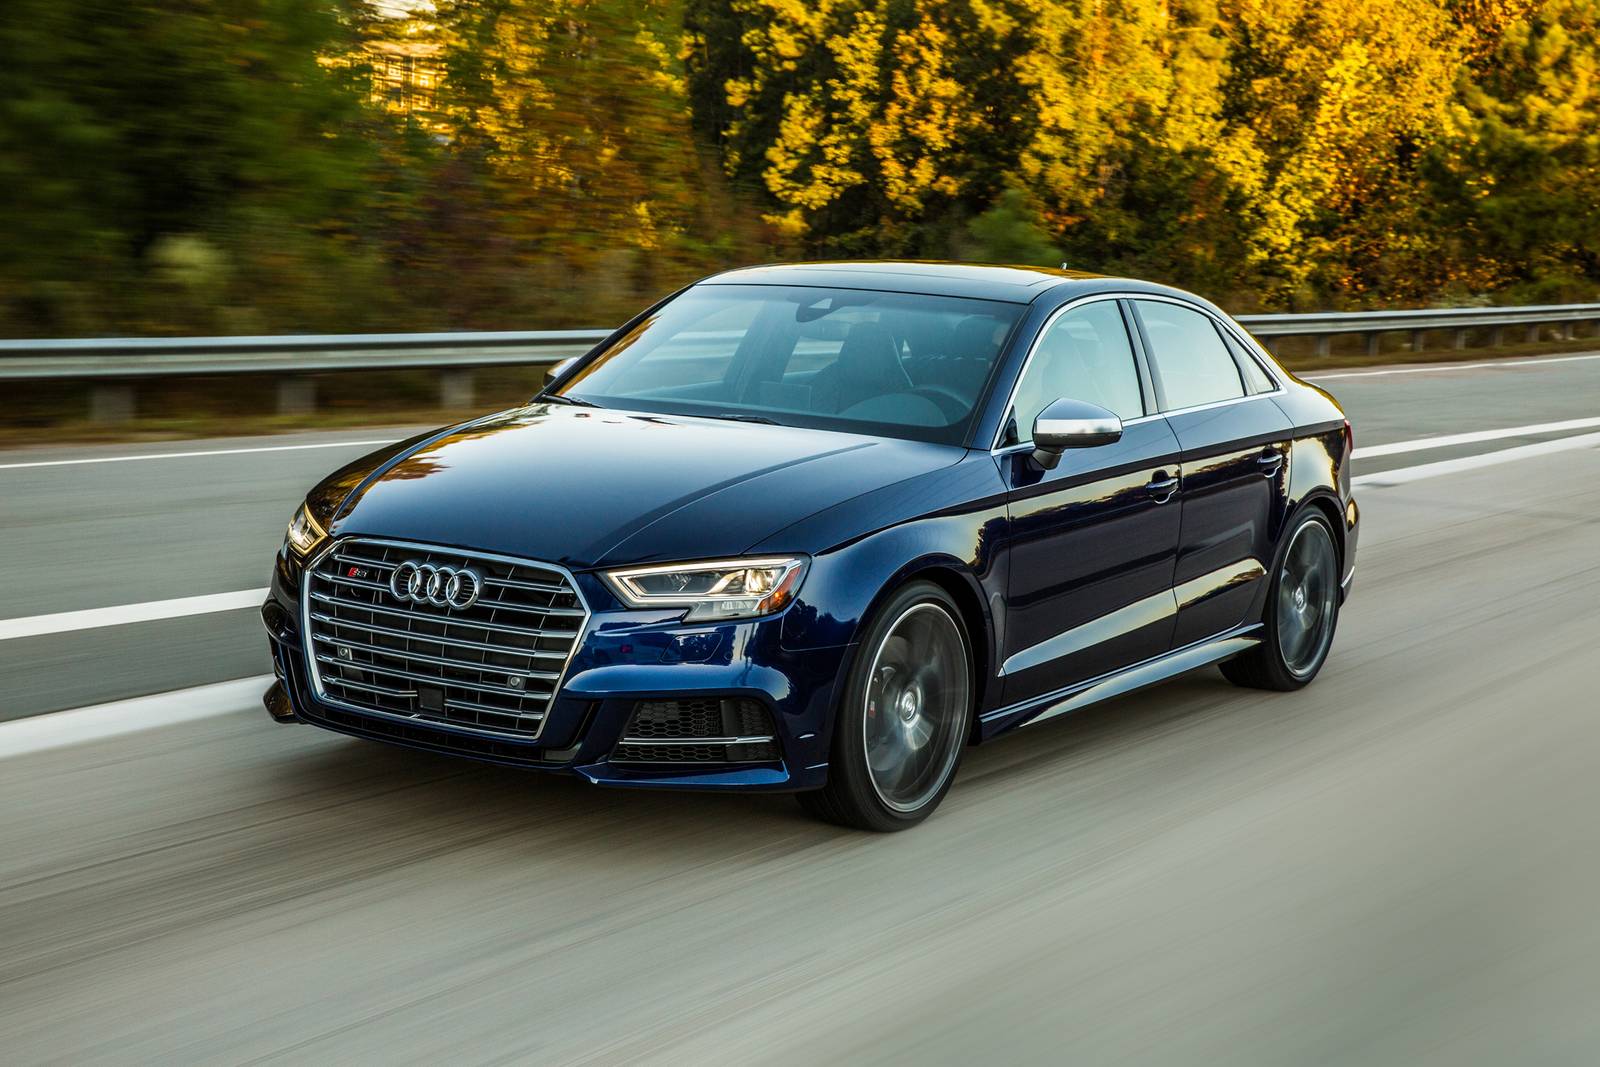 2020 Audi S3 Review & Ratings | Edmunds